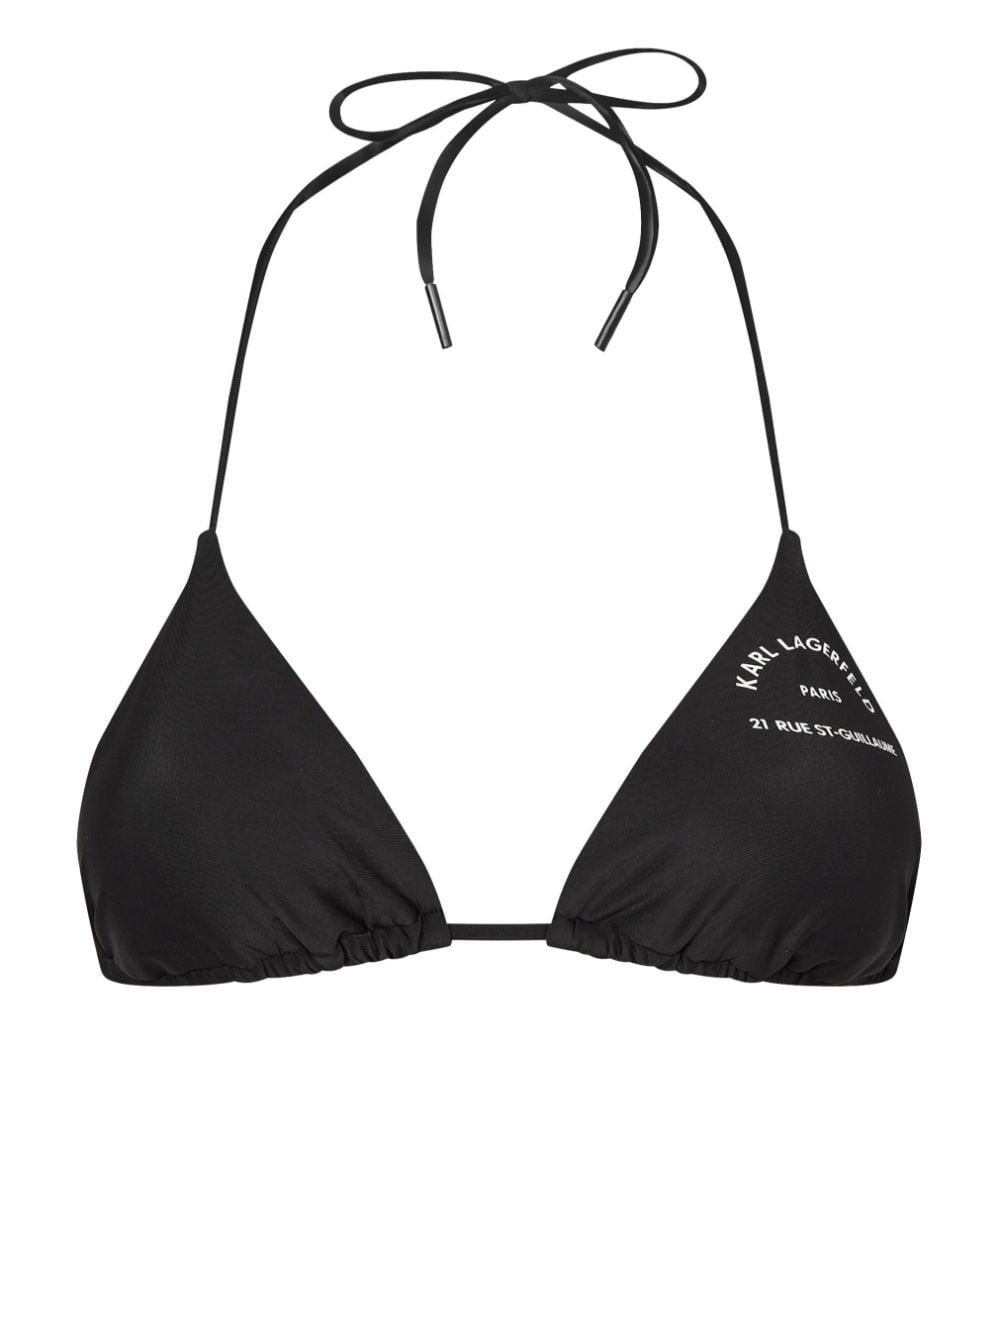 Karl Lagerfeld Rue St-Guillaume triangle bikini top - Black von Karl Lagerfeld